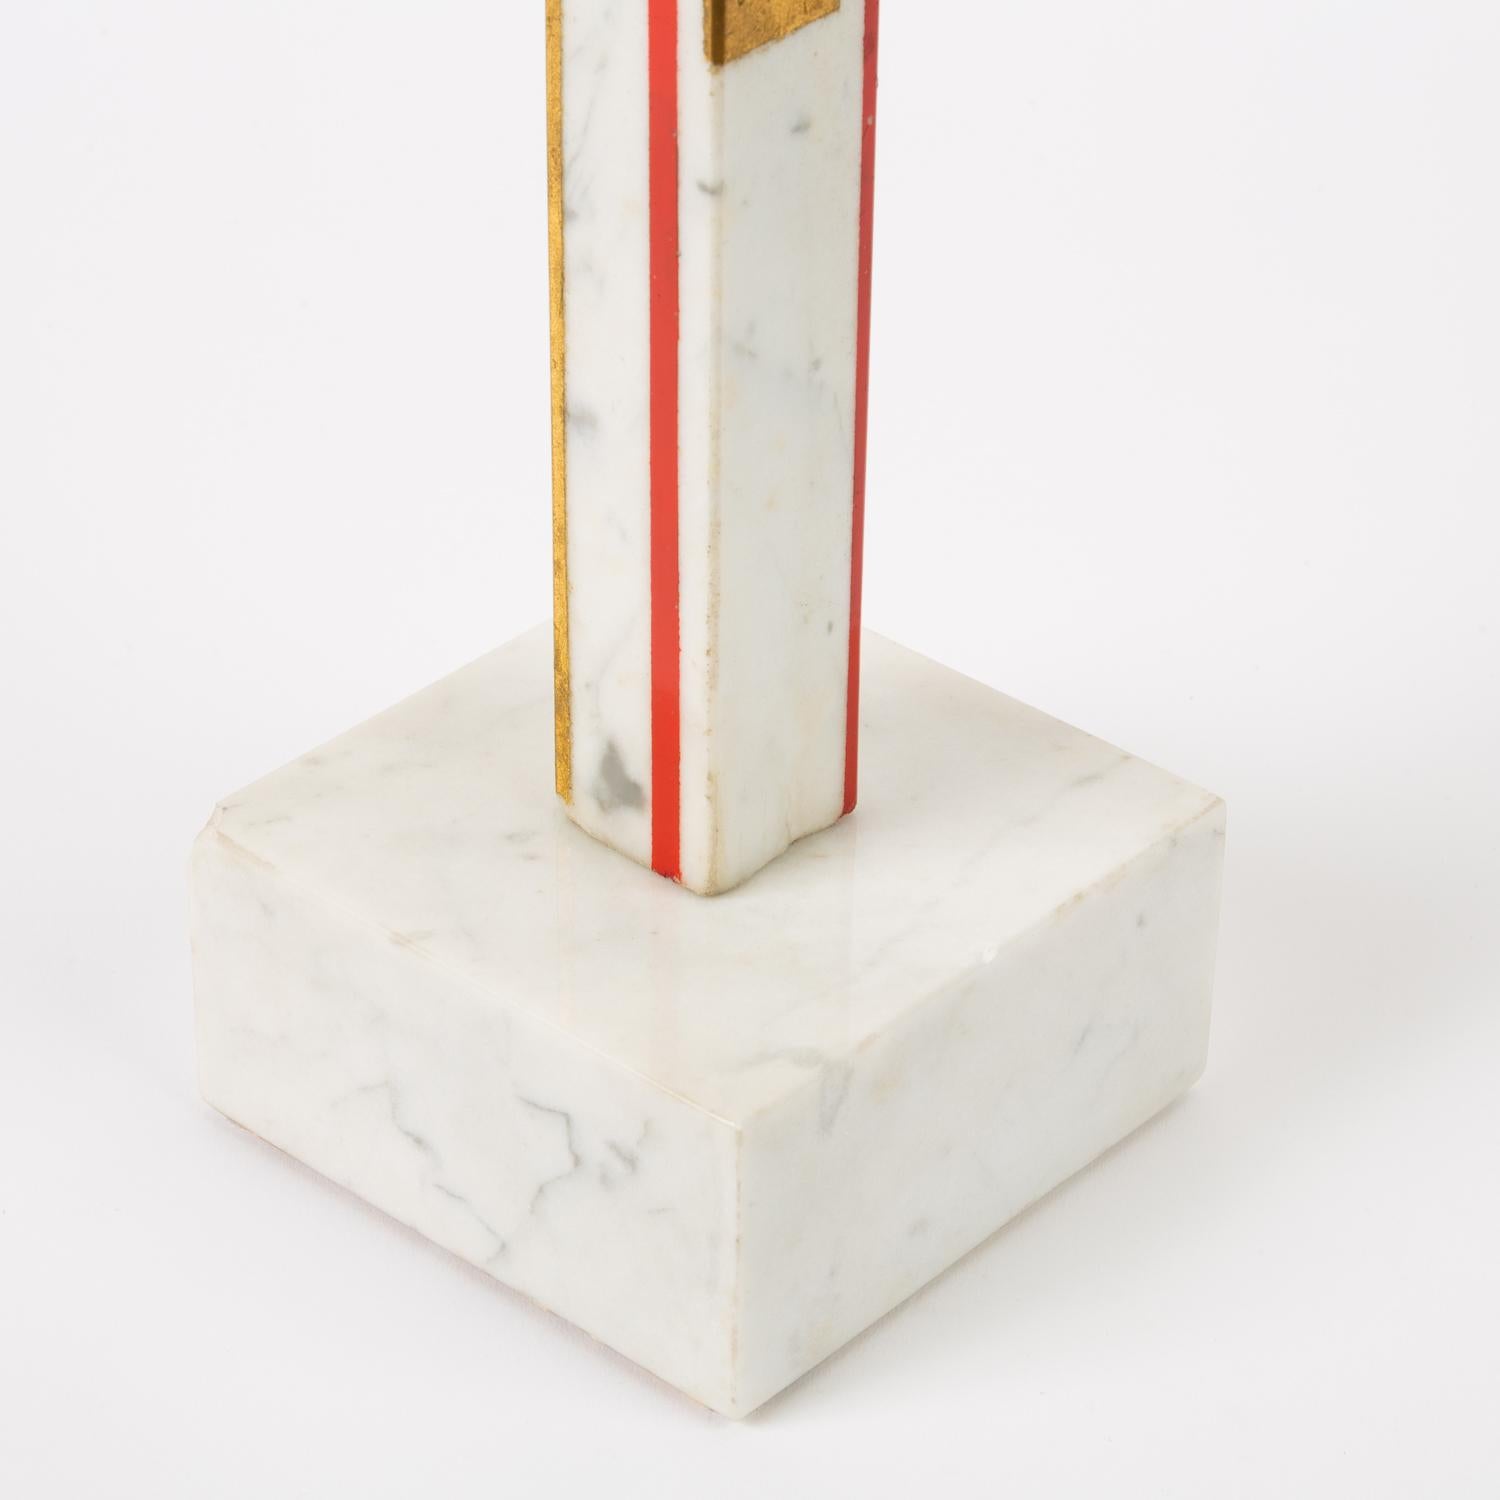 Marble Sculpture by Ilya Bolotowsky, “Column #22” 3